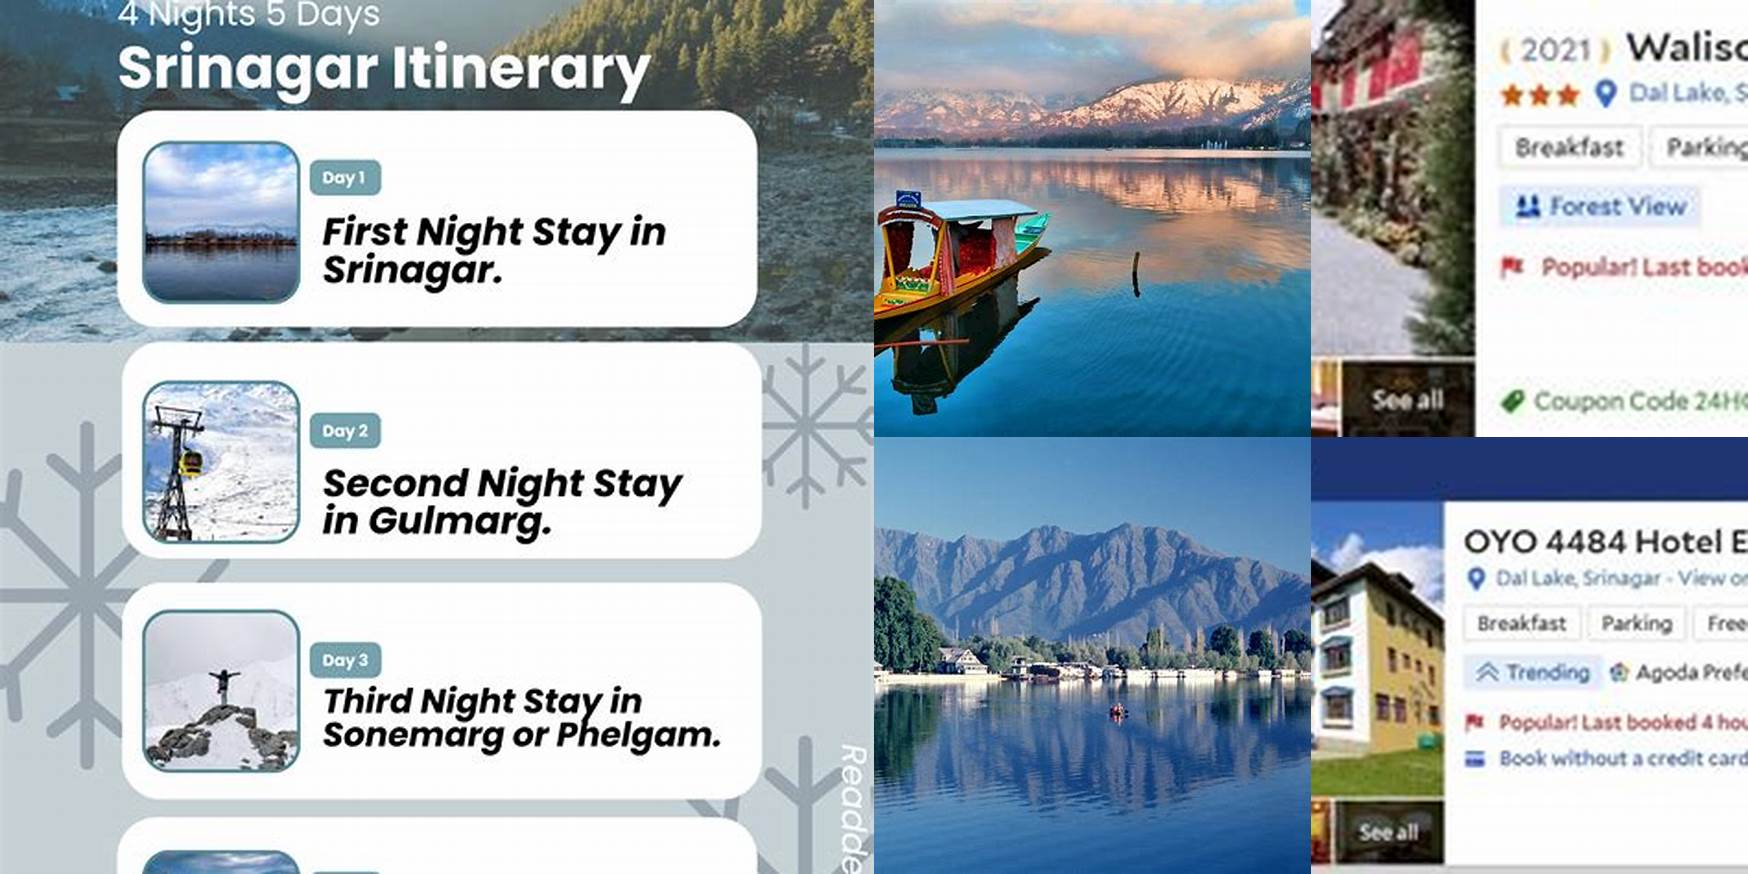 Srinagar Itinerary 4 Nights